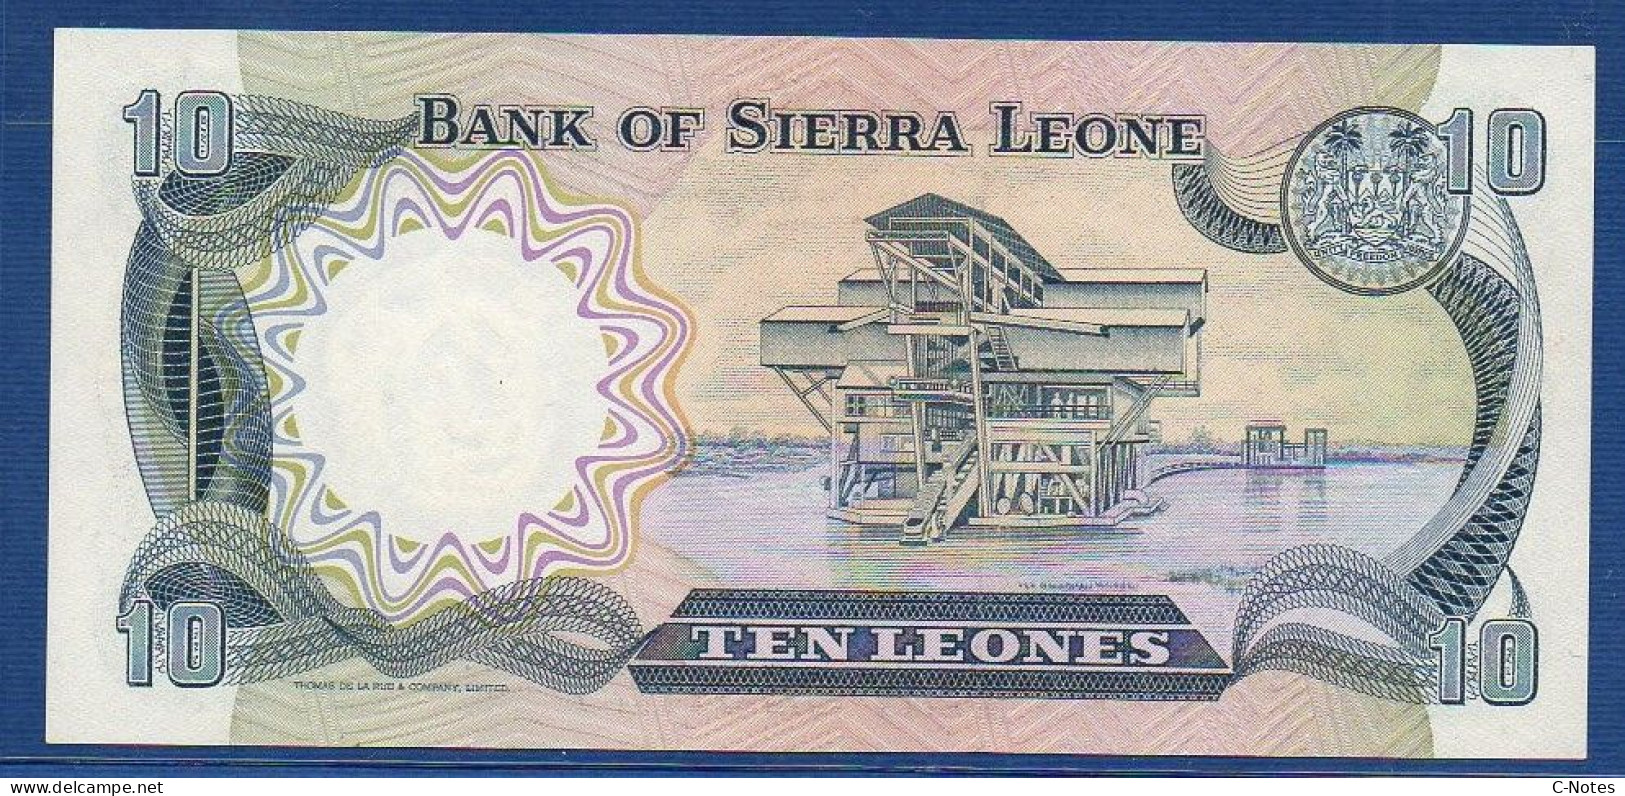 SIERRA LEONE - P. 8c – 10 Leones 1984 UNC, S/n E/11 023621 - Sierra Leone